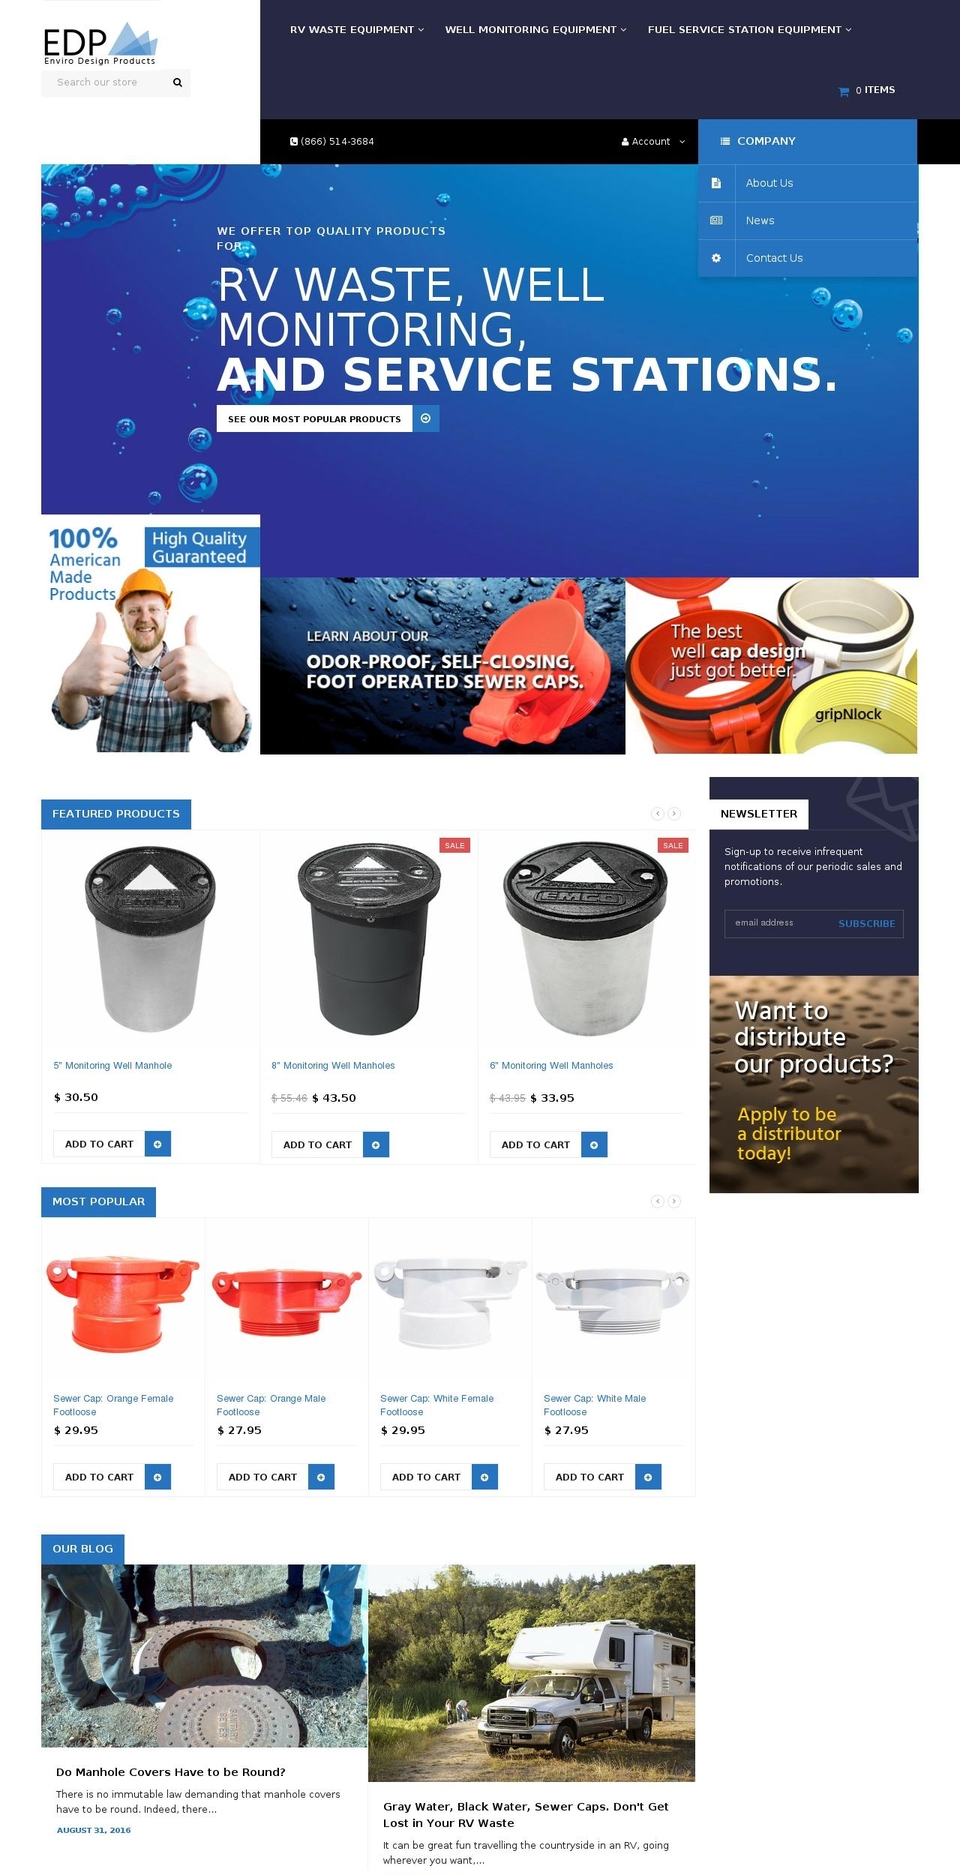 envirodesignproducts.com shopify website screenshot